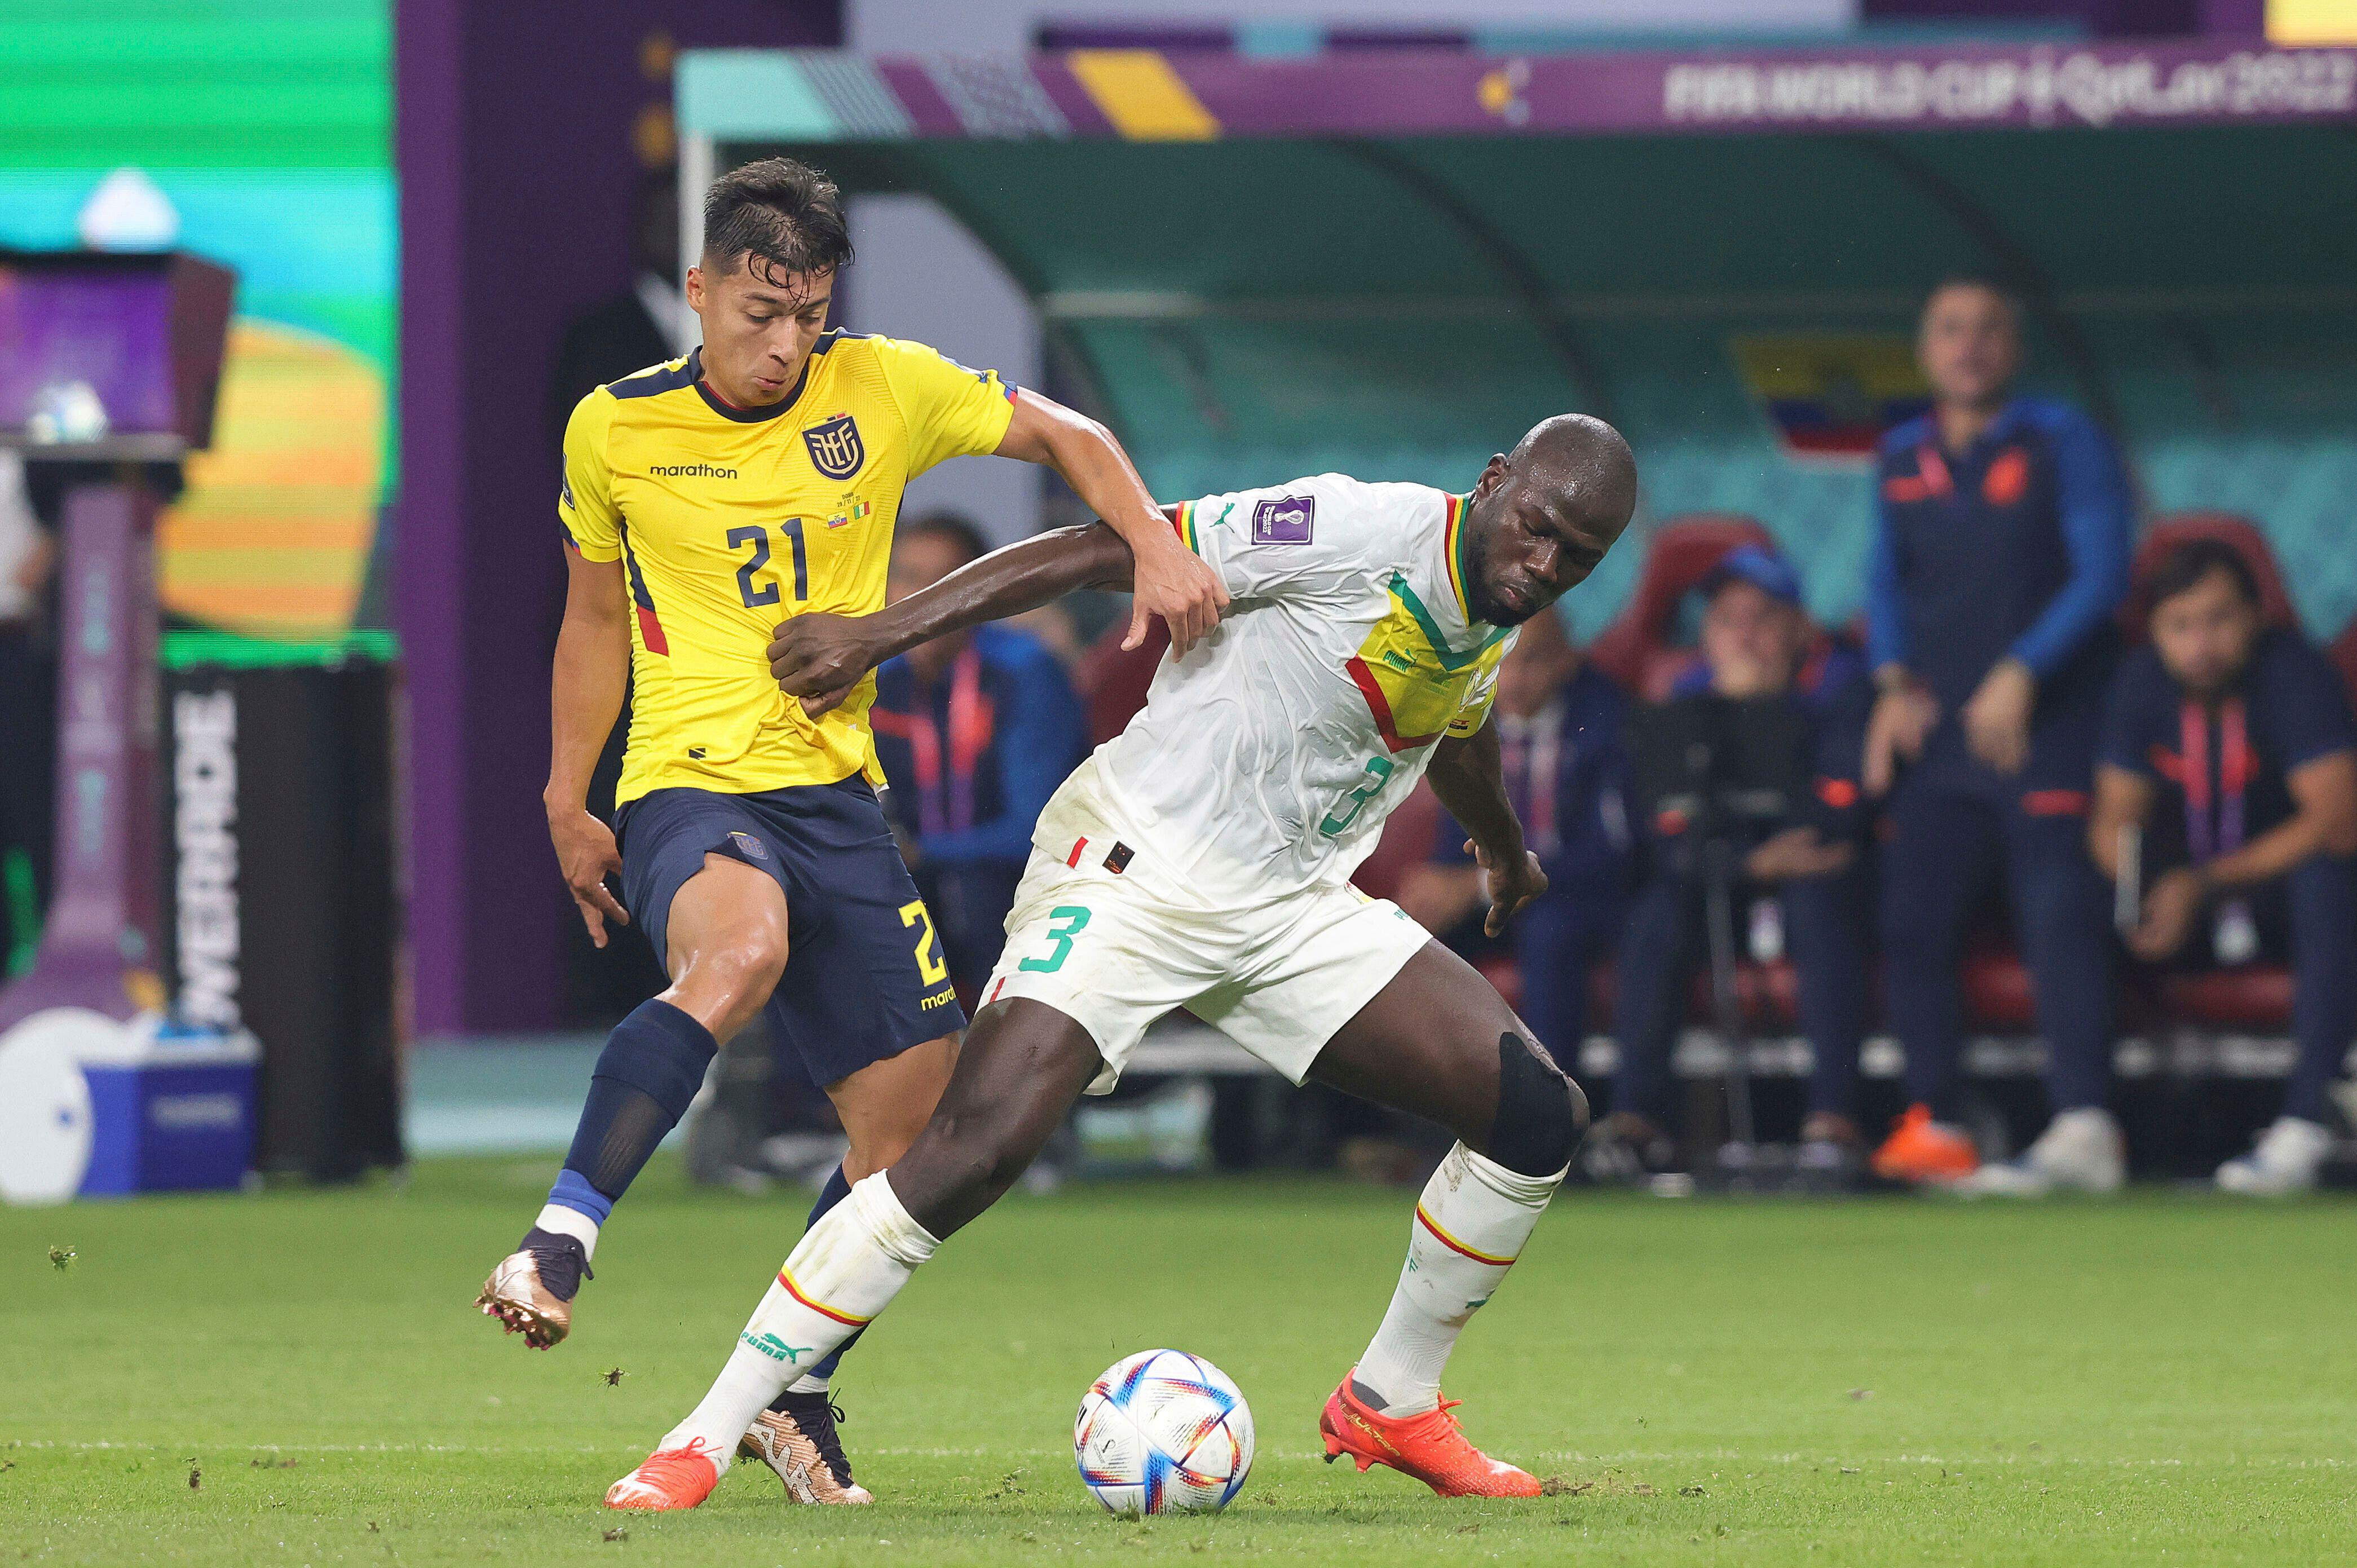 Senegal 2-1 Ecuador Match report, player ratings, fan reaction and more